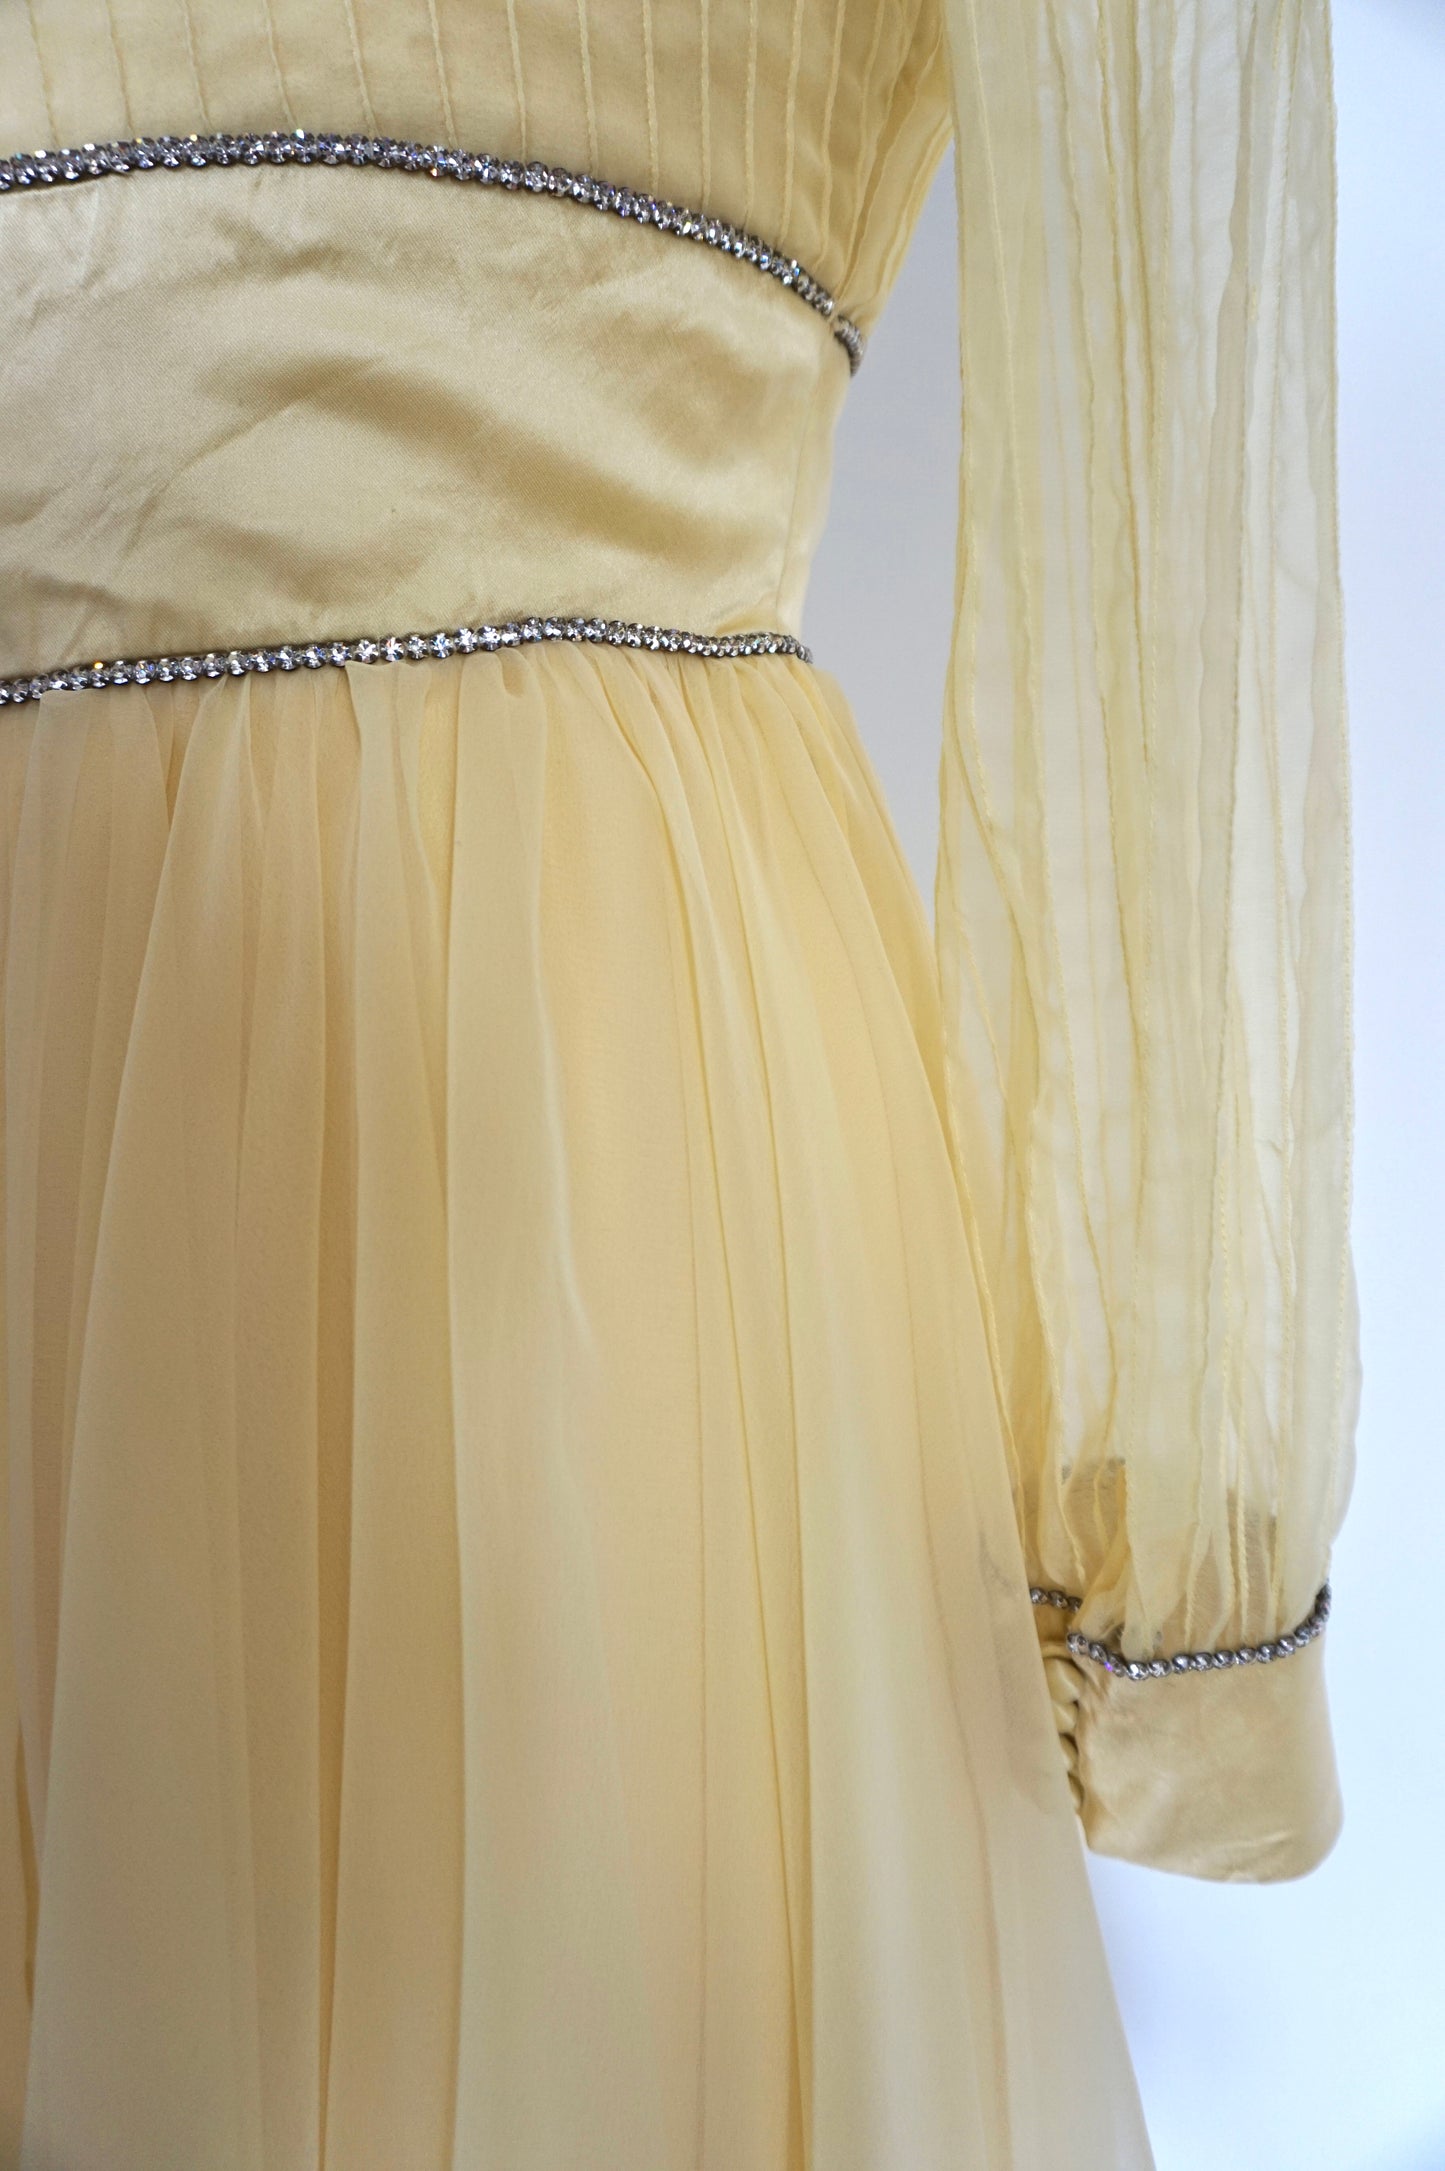 Sally Milgrim 1970's Yellow Mini Dress